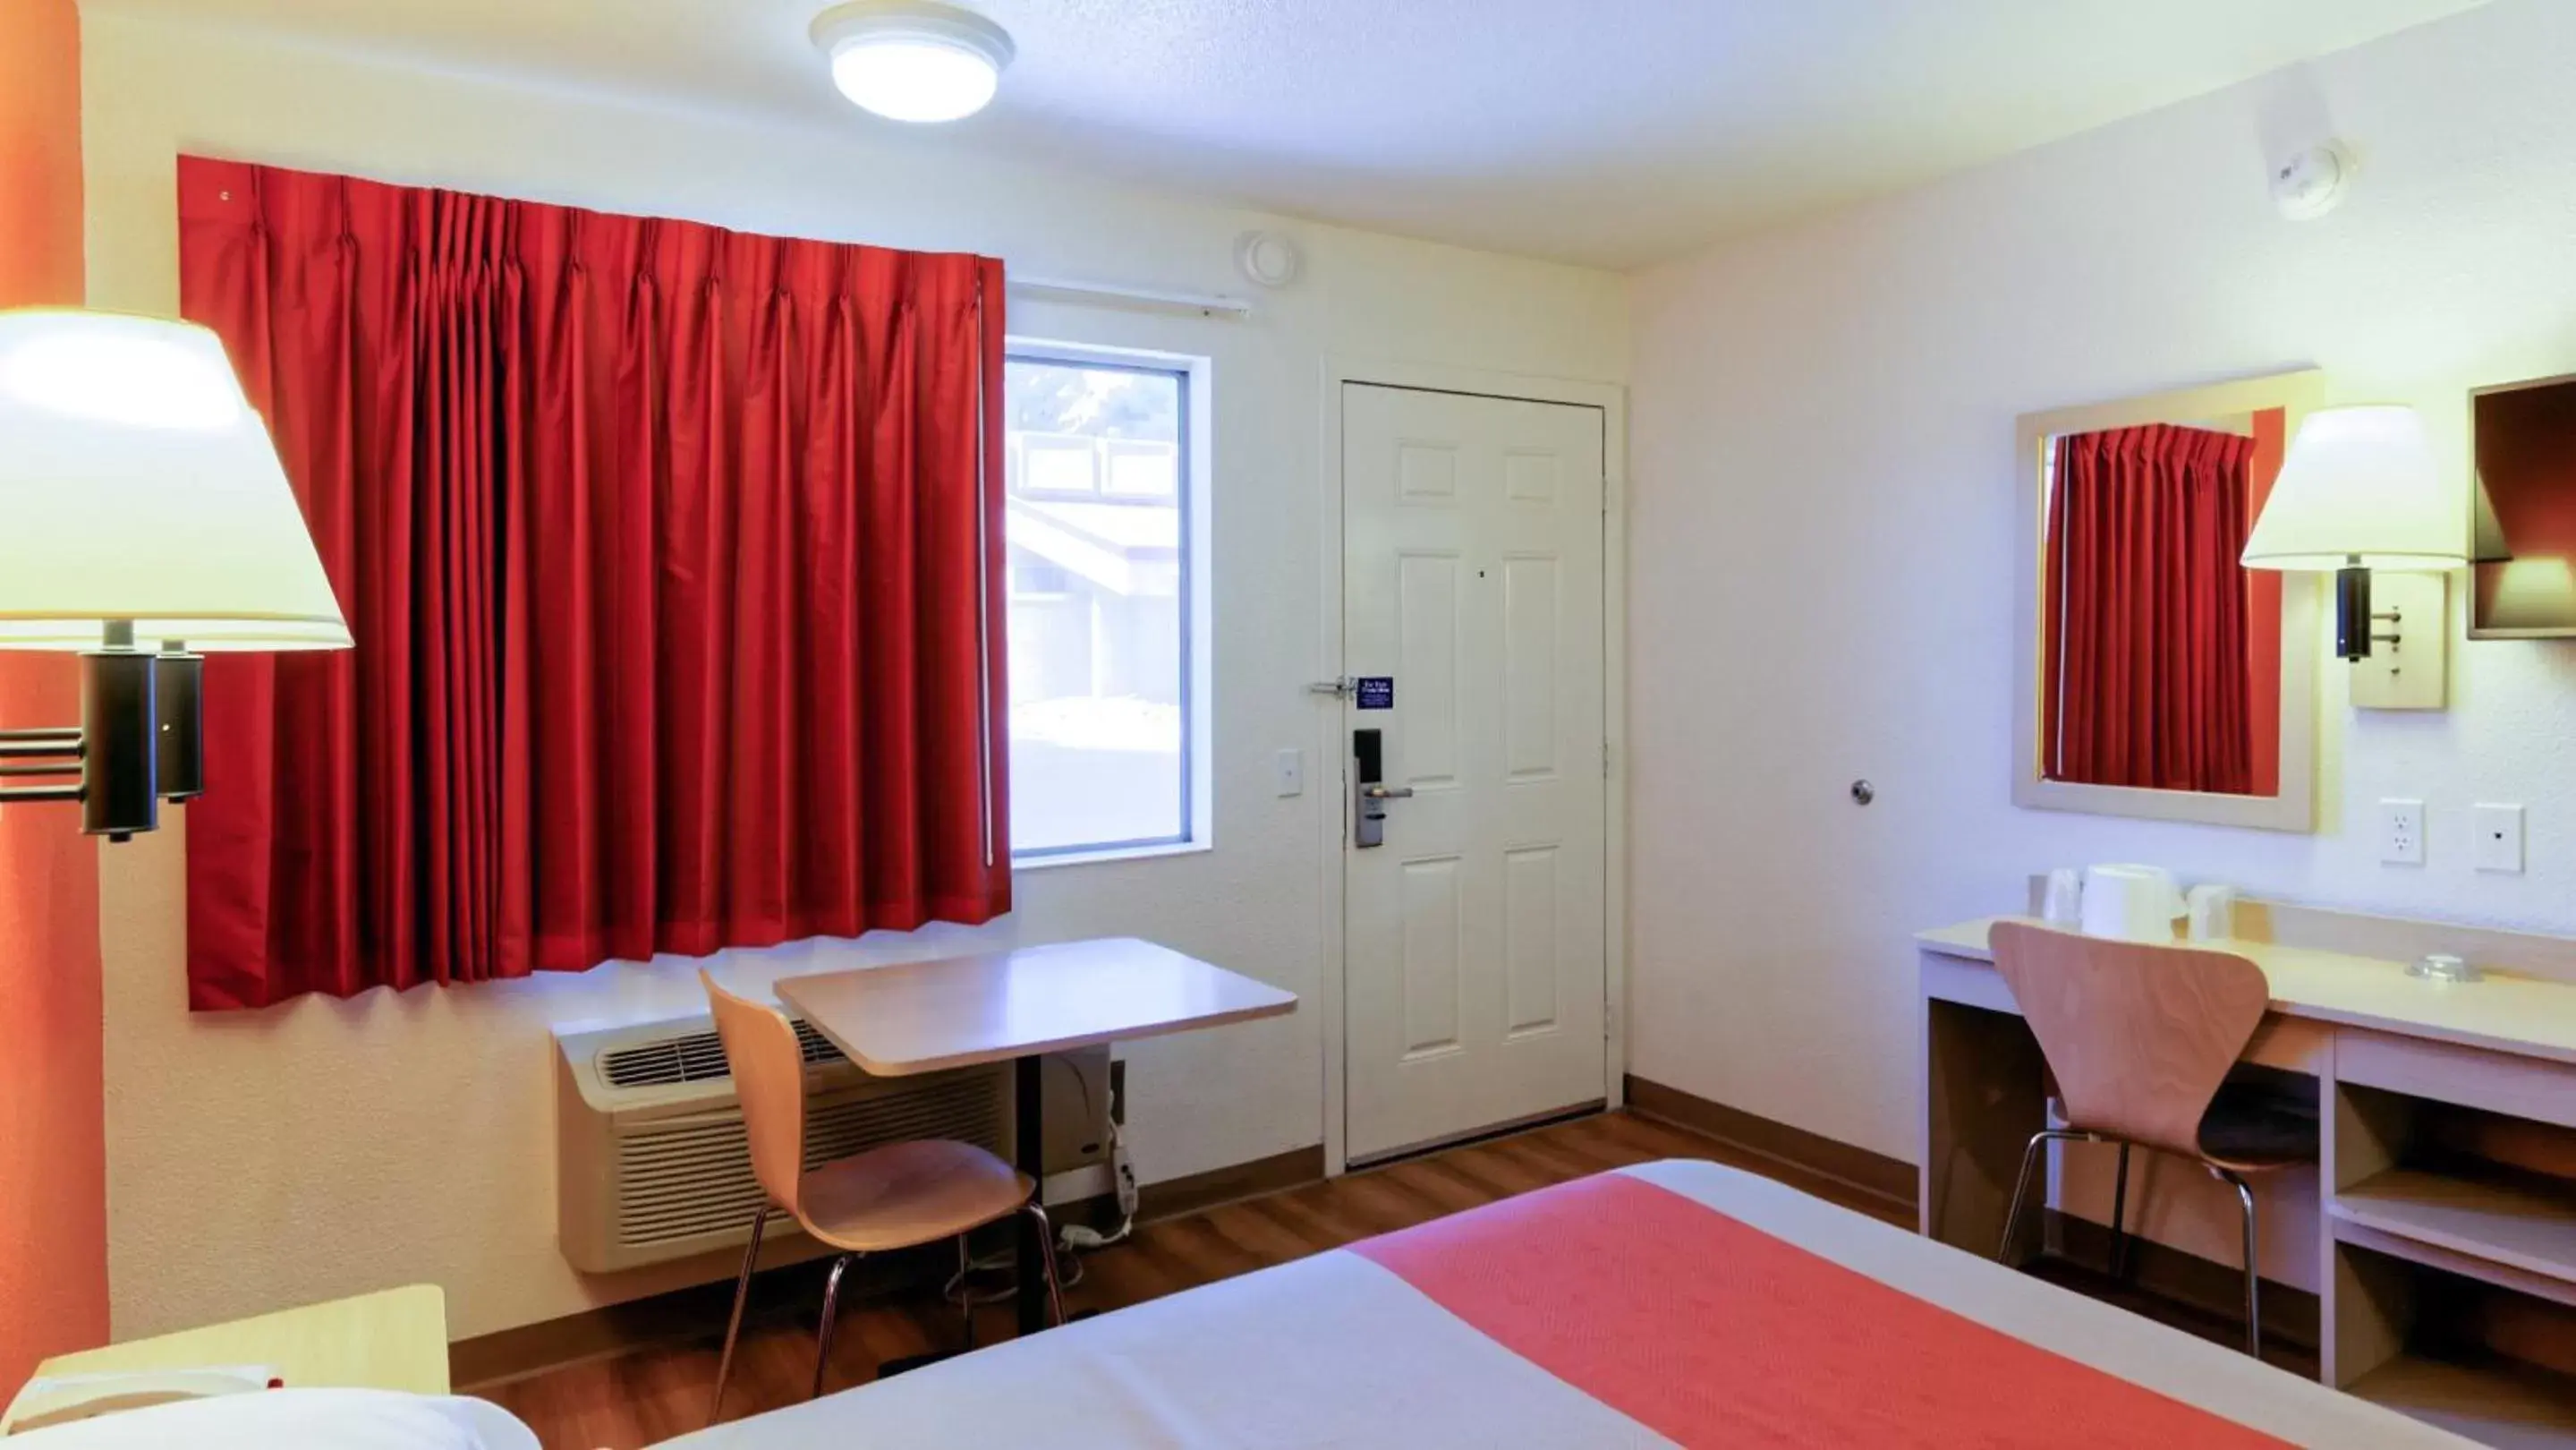 TV and multimedia, Room Photo in Motel 6-Chico, CA